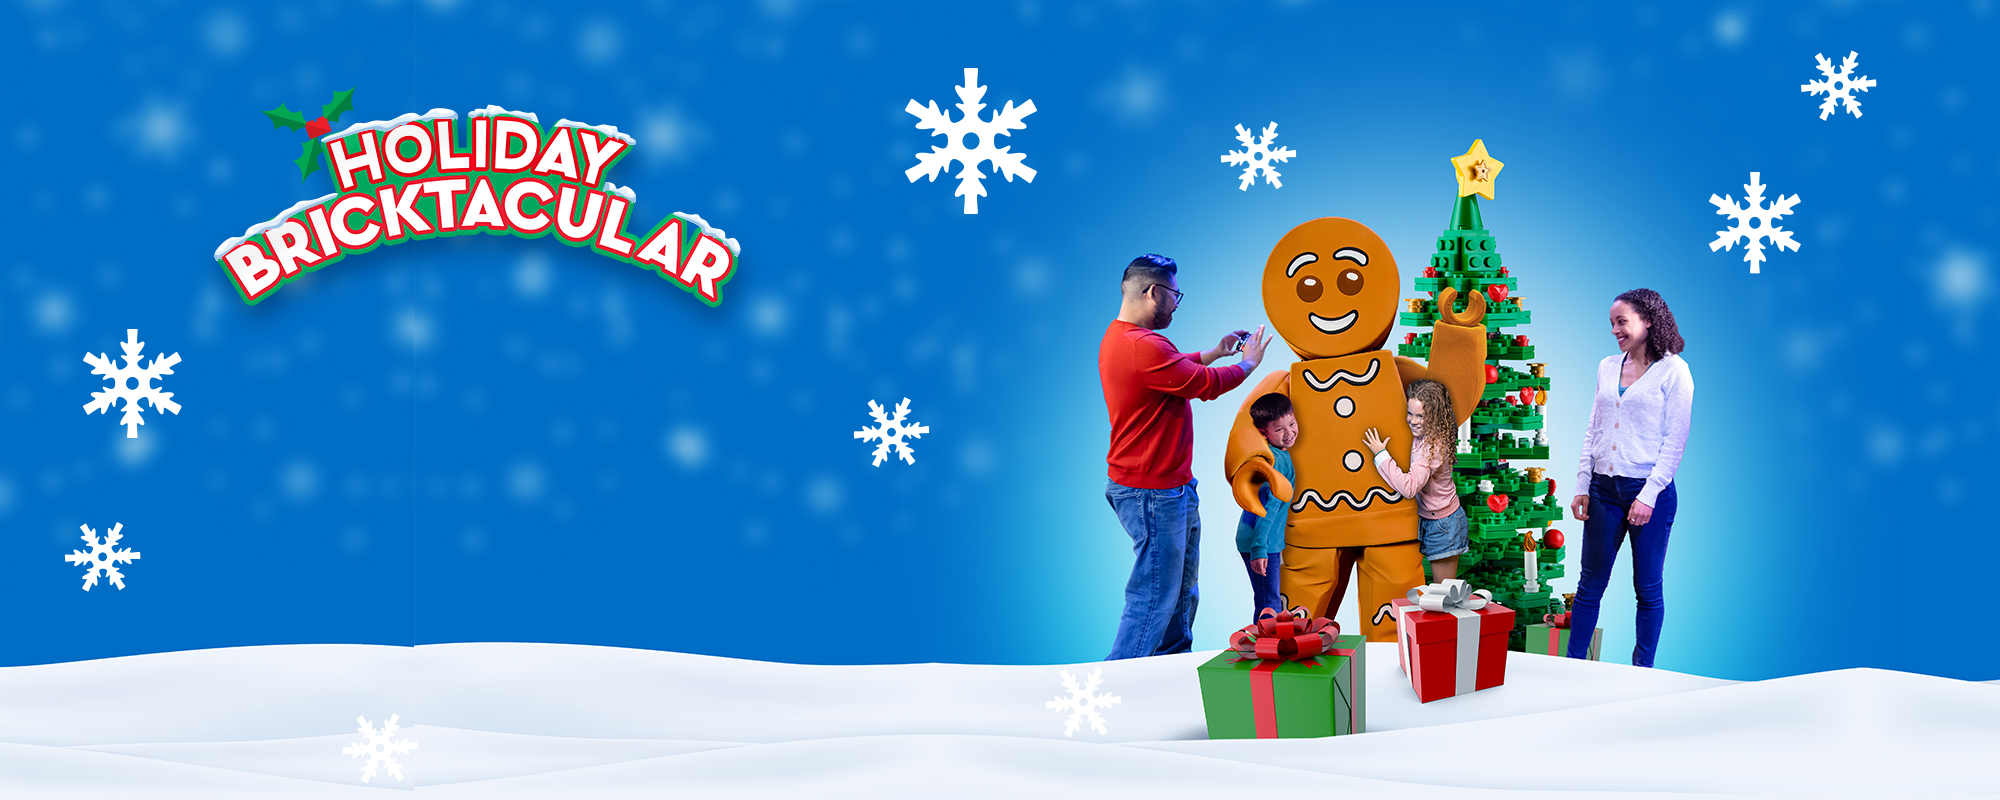 Holiday Bricktacular Homepage Desktop Gingerbread 5 2